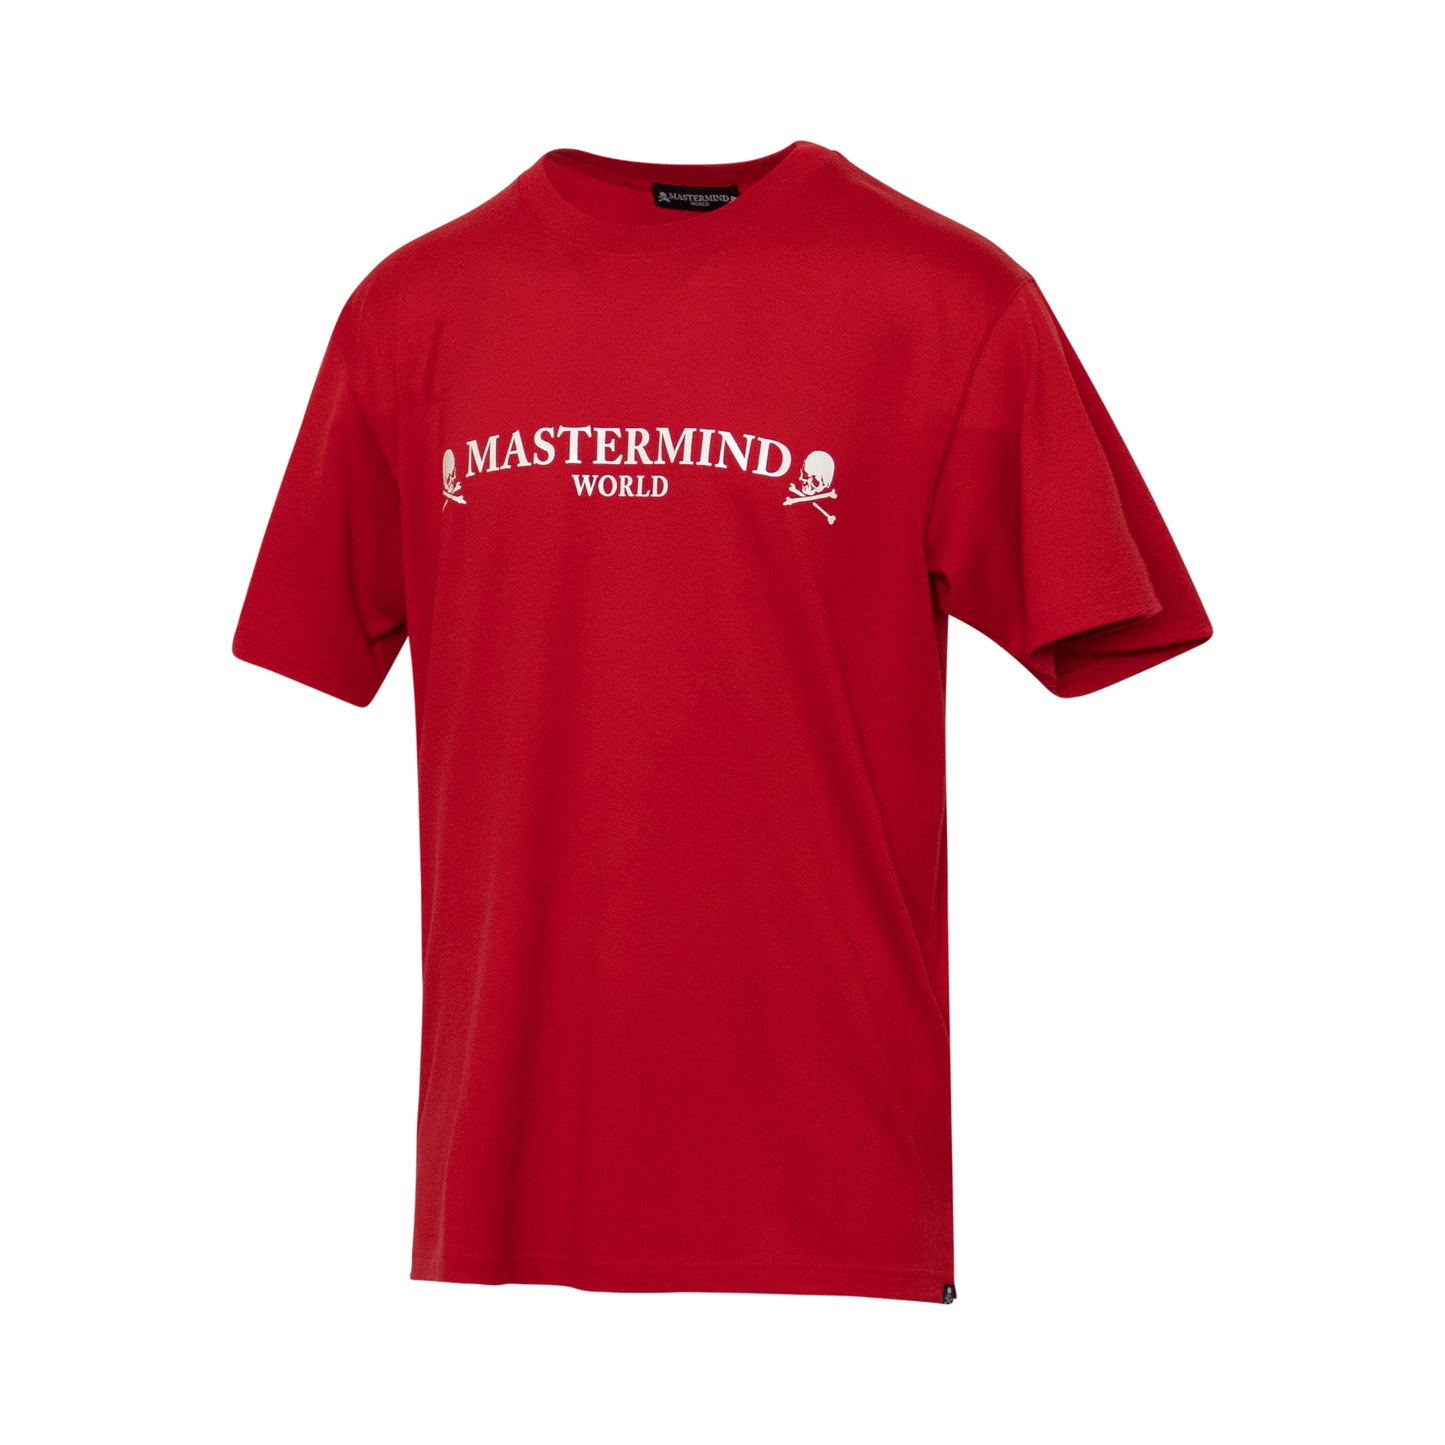 Mastermind World T-Shirt in Red